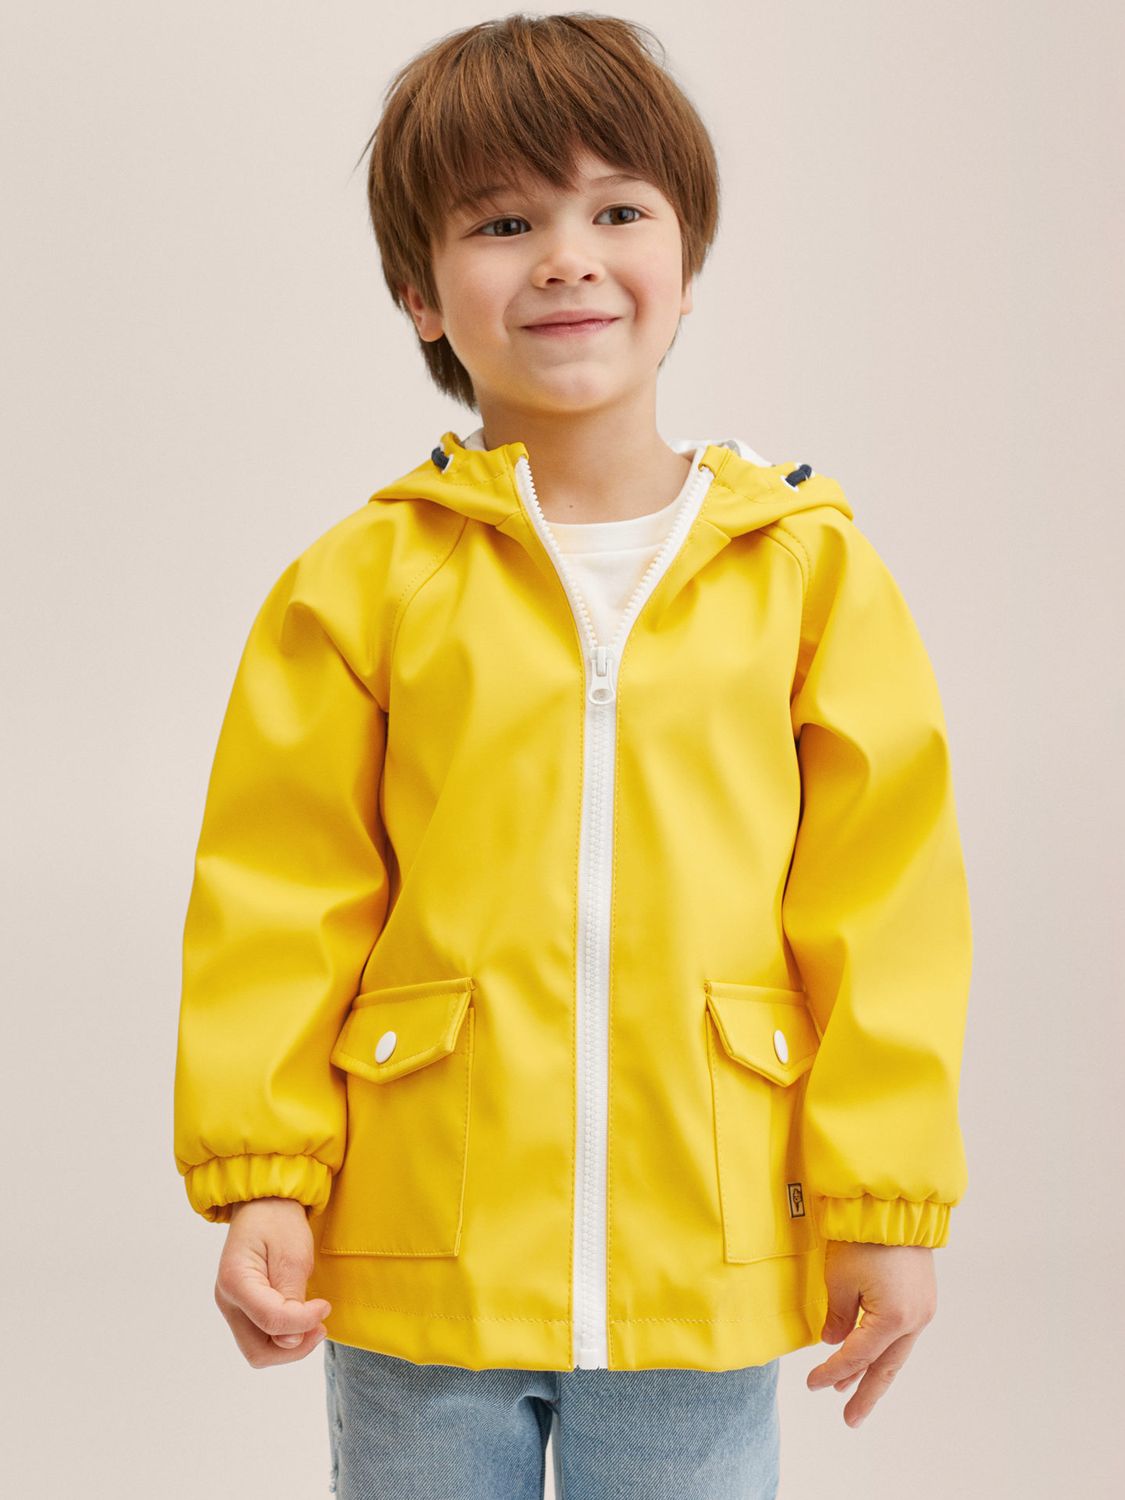 Mango Kids' Rain Parka Jacket, Yellow